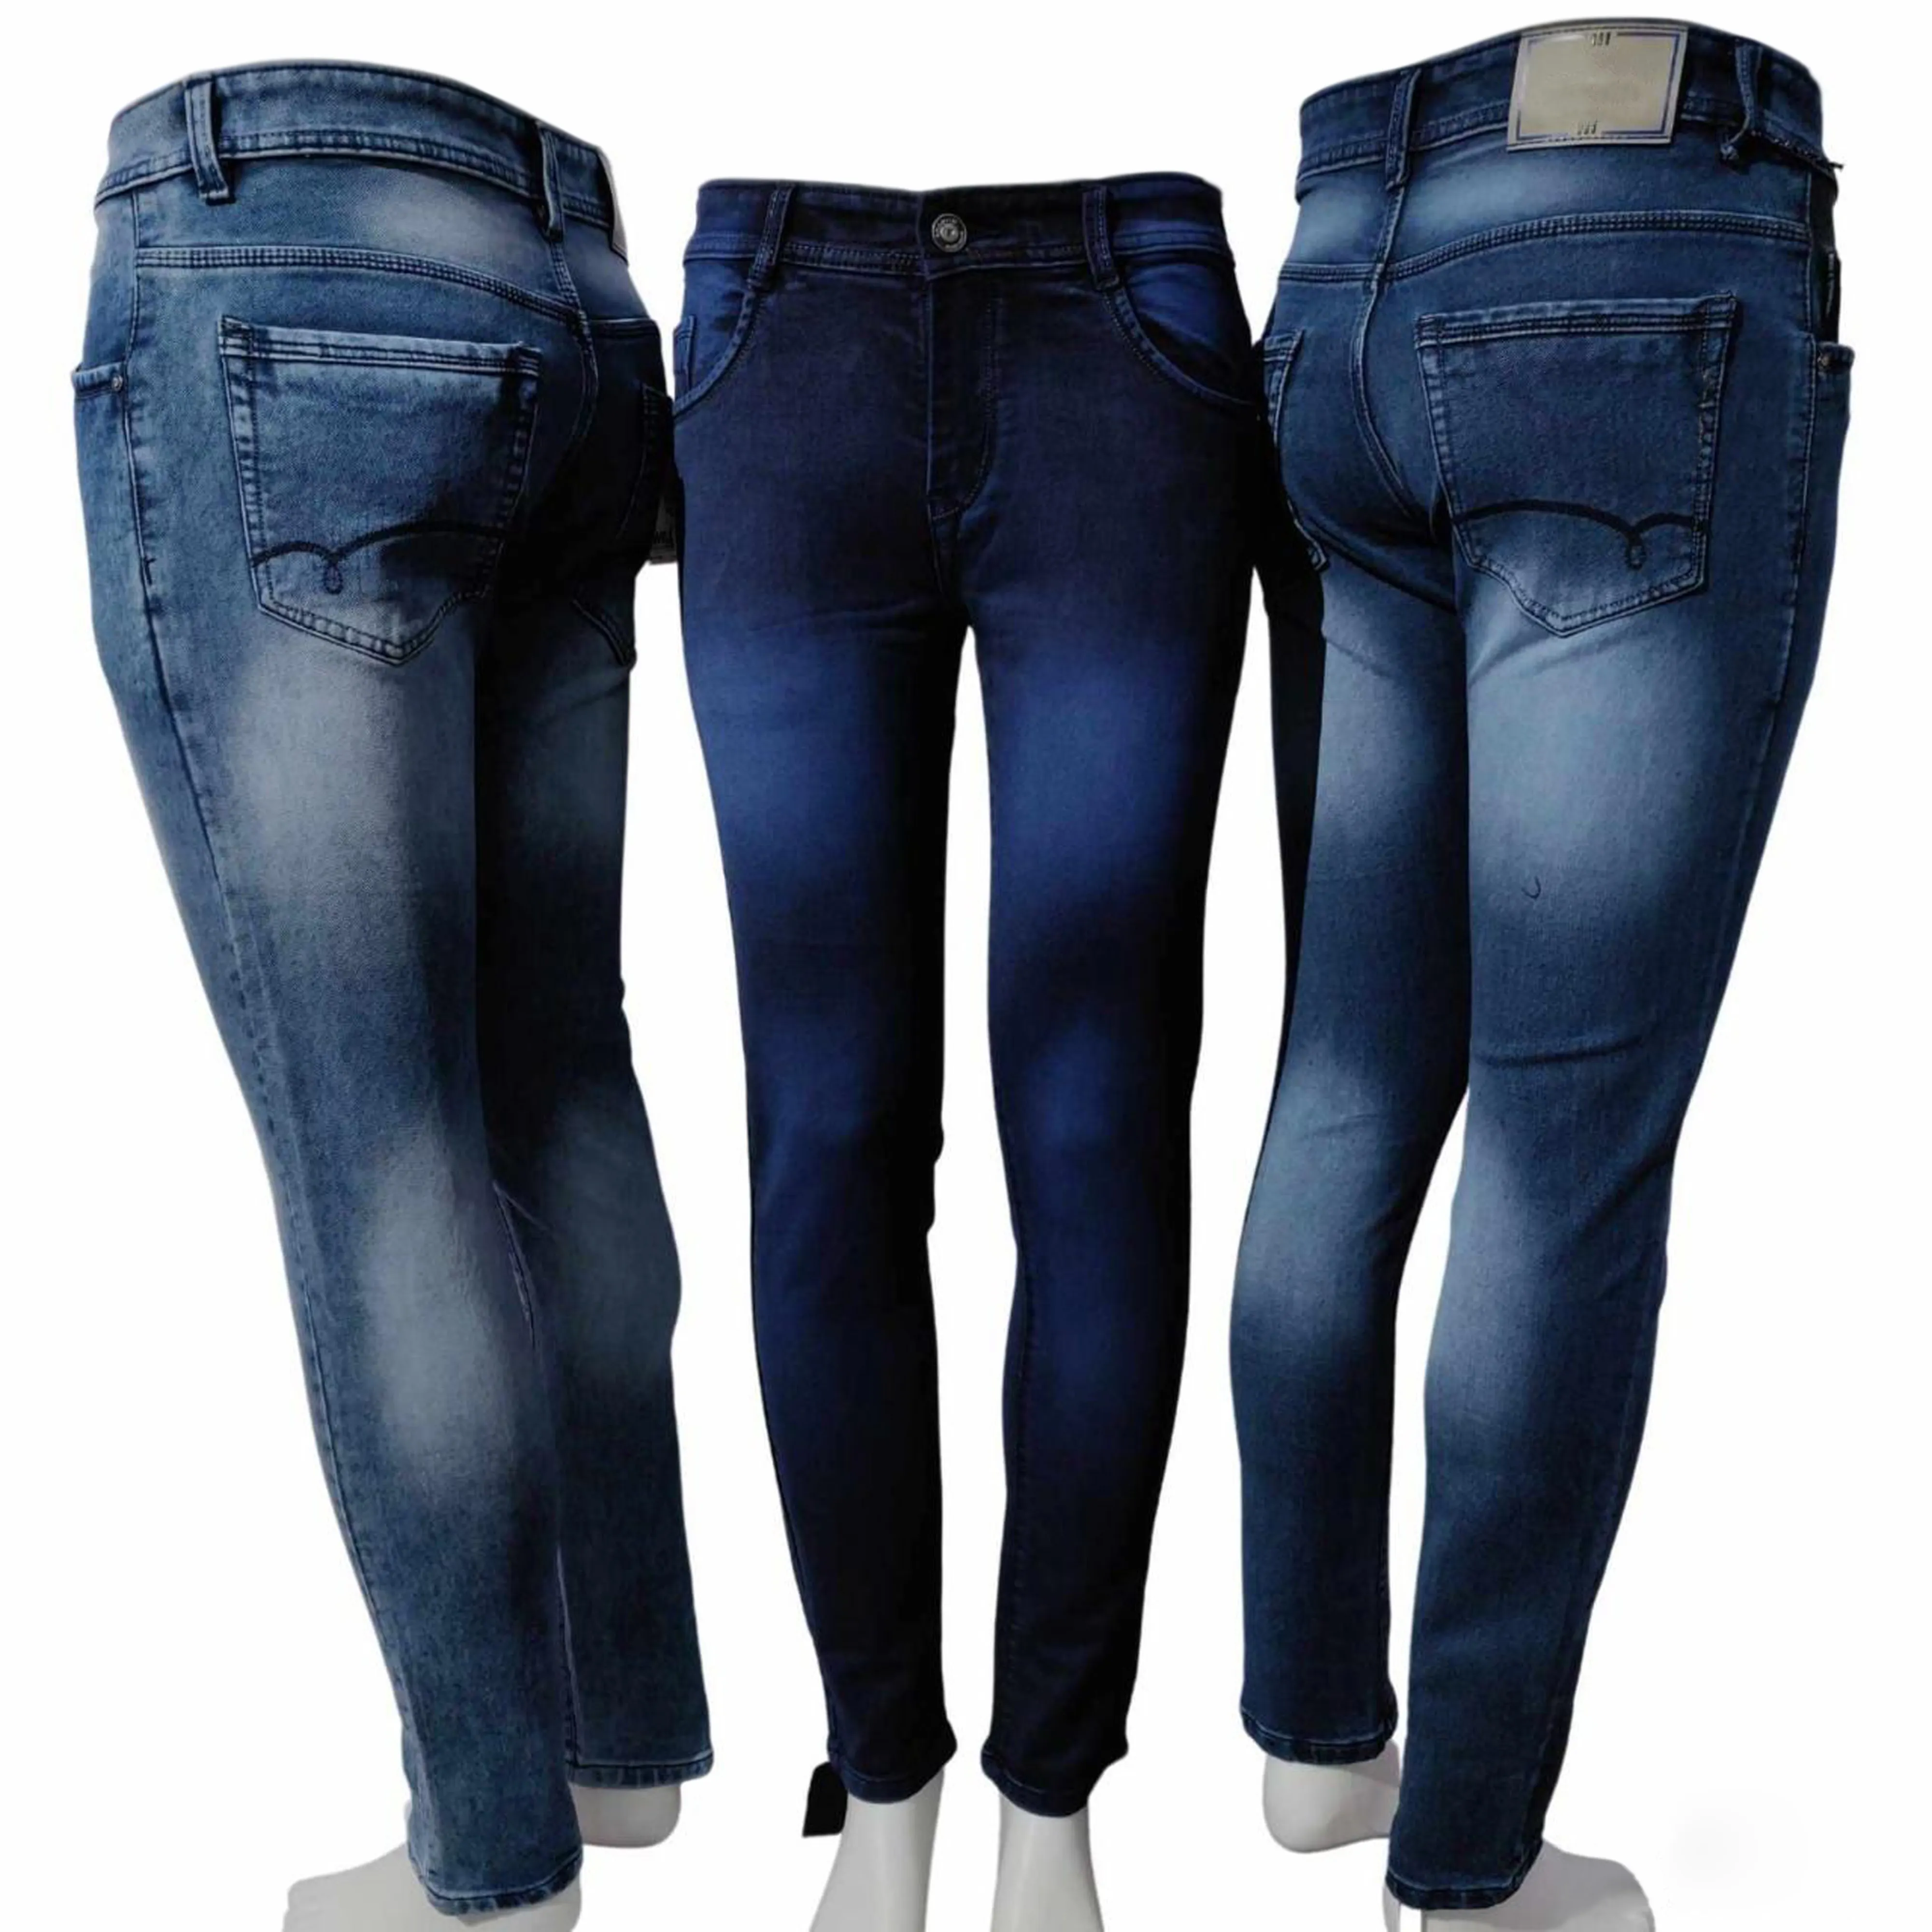 UKA חברות שטף קלאסי המכר אמצע מותניים כותנה ג 'ינס רוכסן ג' ינס לגברים במחיר הטוב ביותר מוכן ספינה